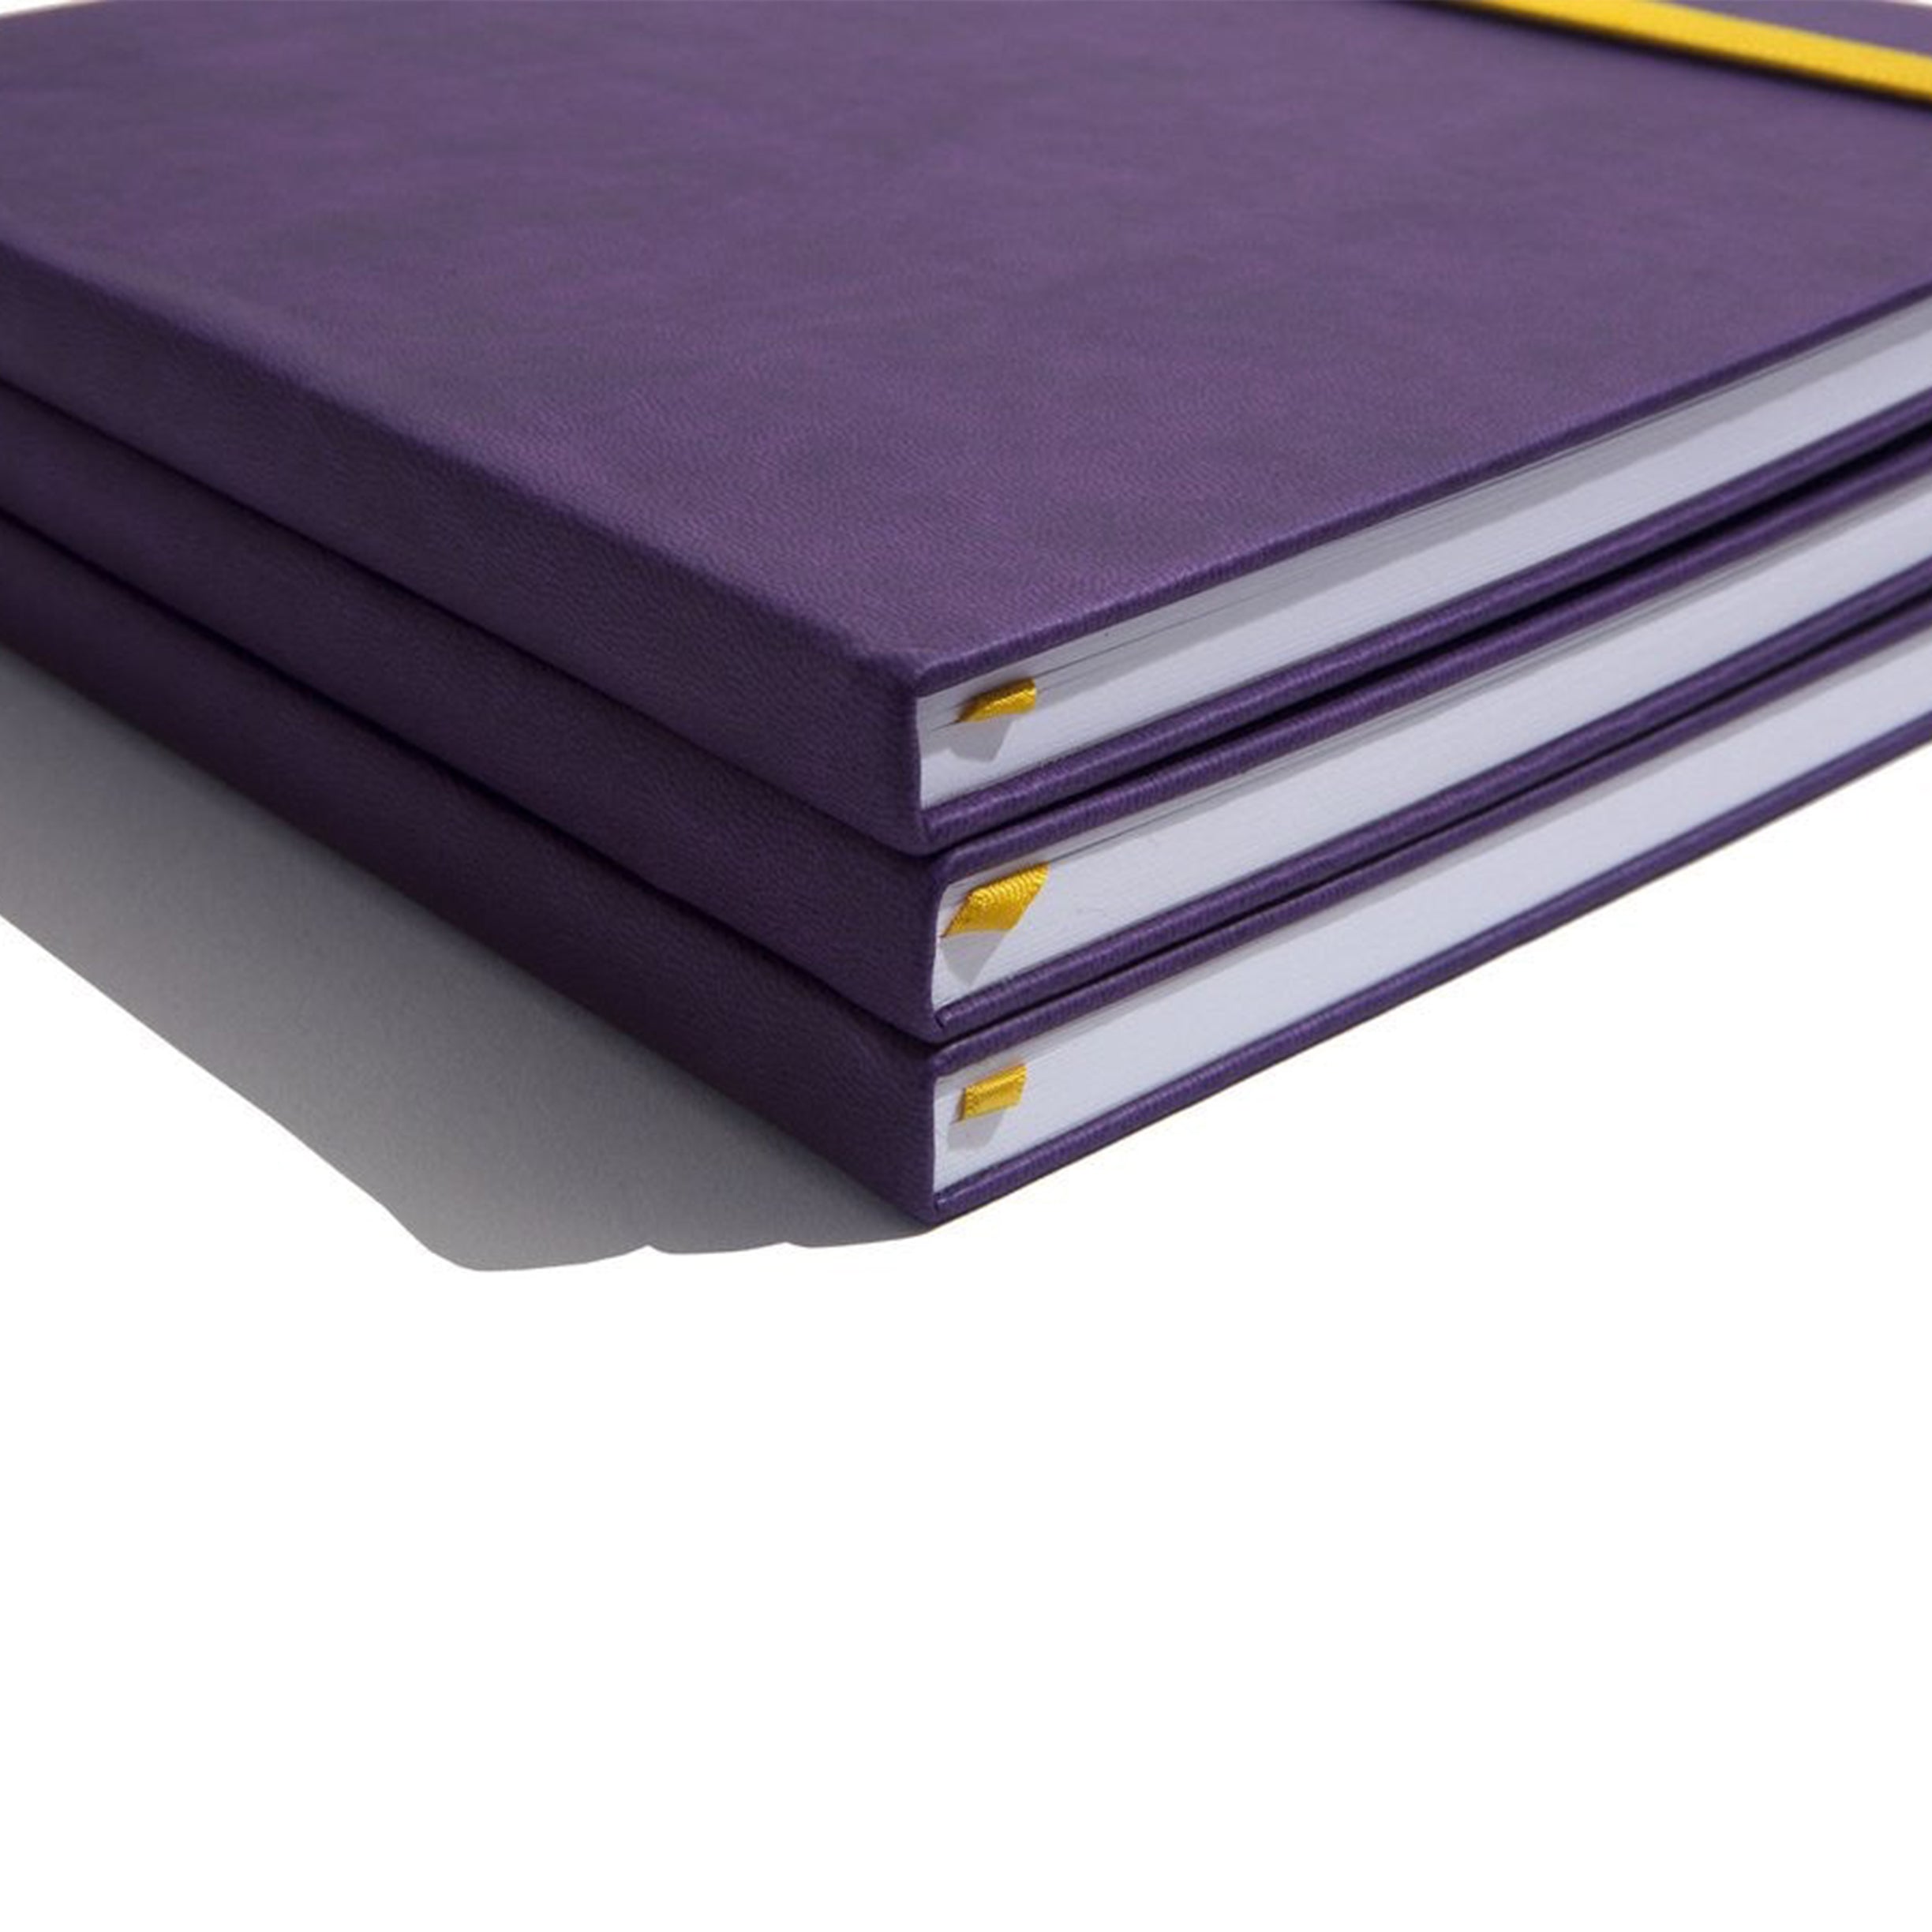  Ohuhu Sketchbook Marker Paper Pad: 8.3x8.3 Square